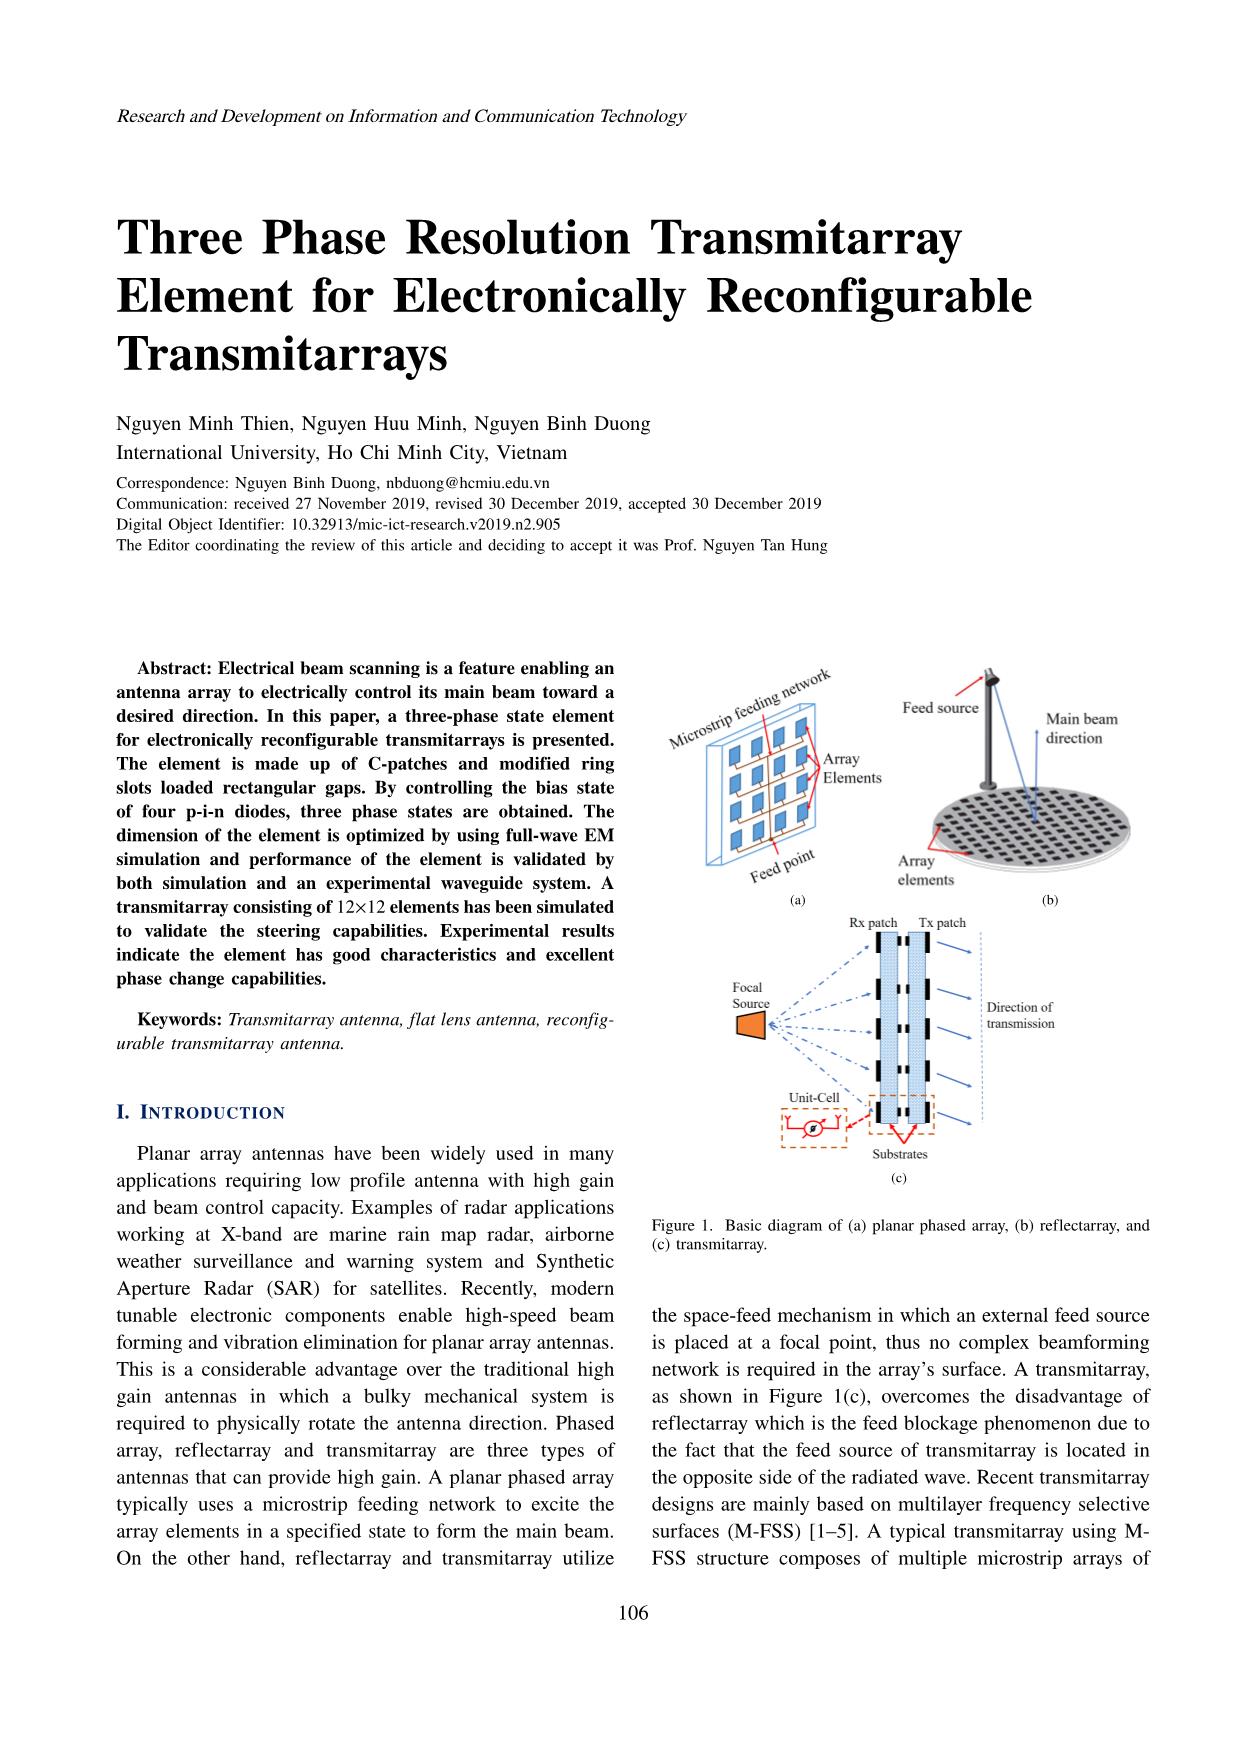 Three phase resolution transmitarray element for electronically reconfigurable transmitarrays trang 1